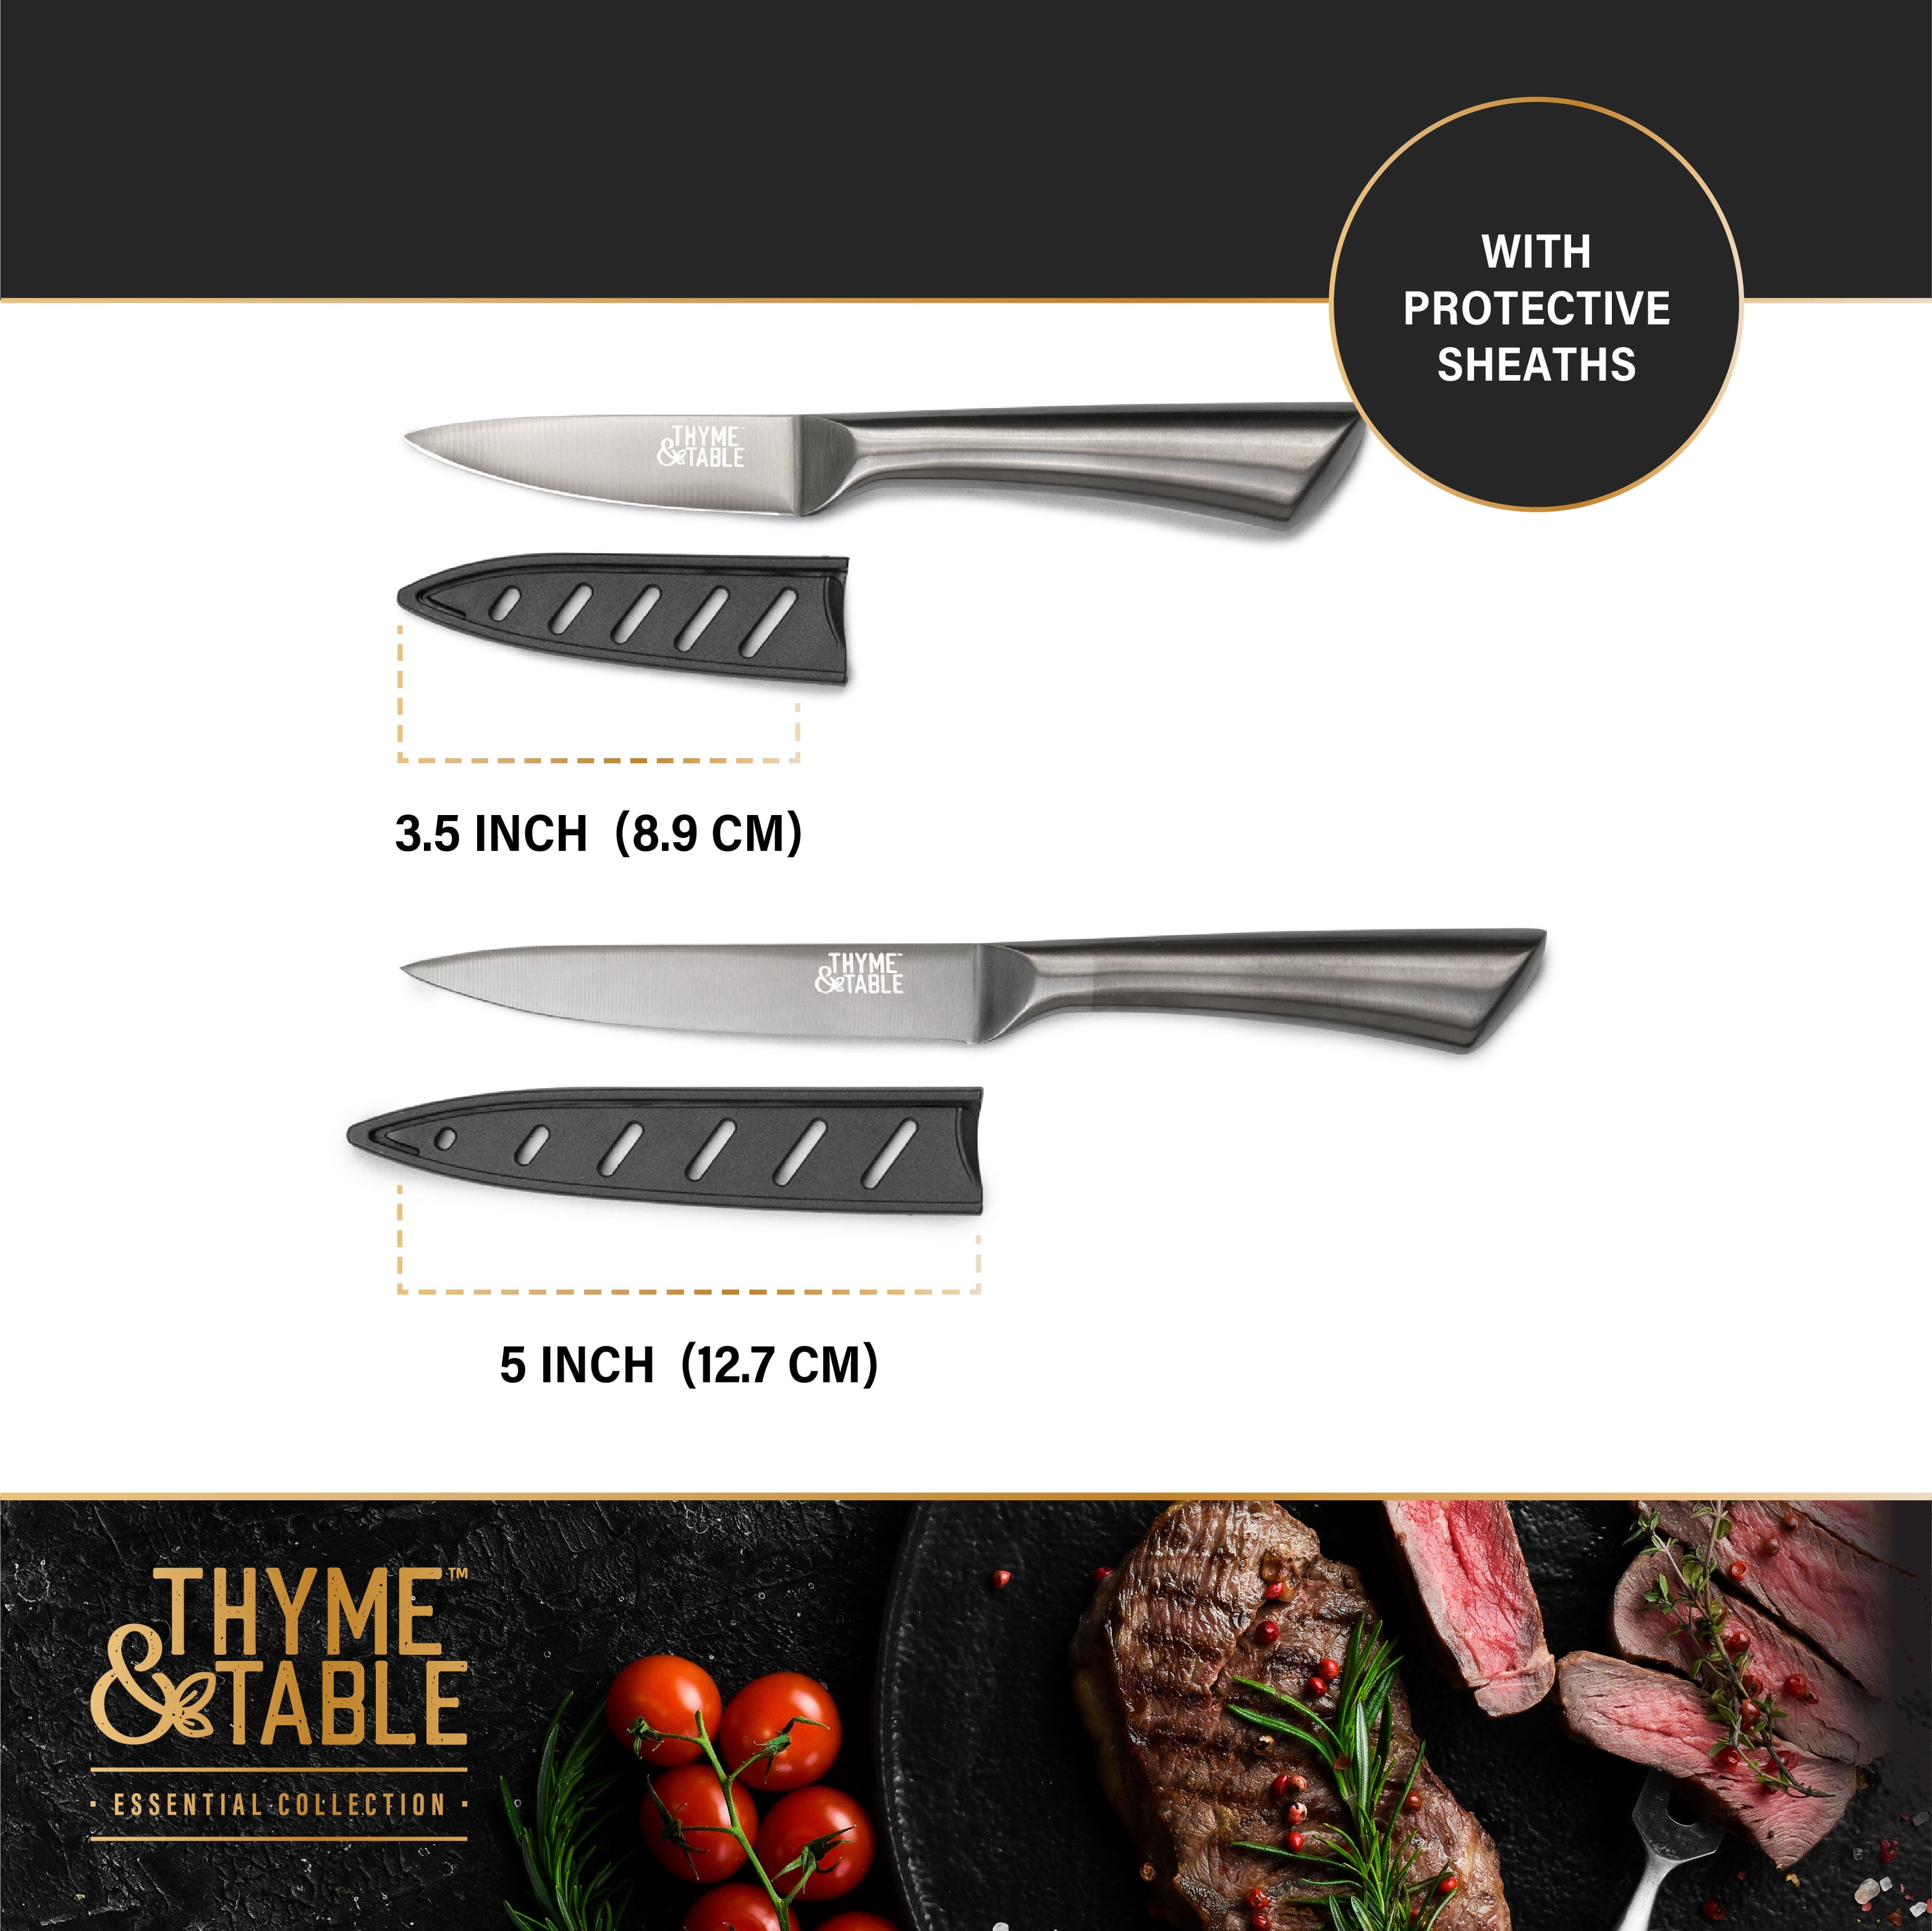 Brewin Professional Kitchen Knives, 3 Piece Chef Knife Set, Black